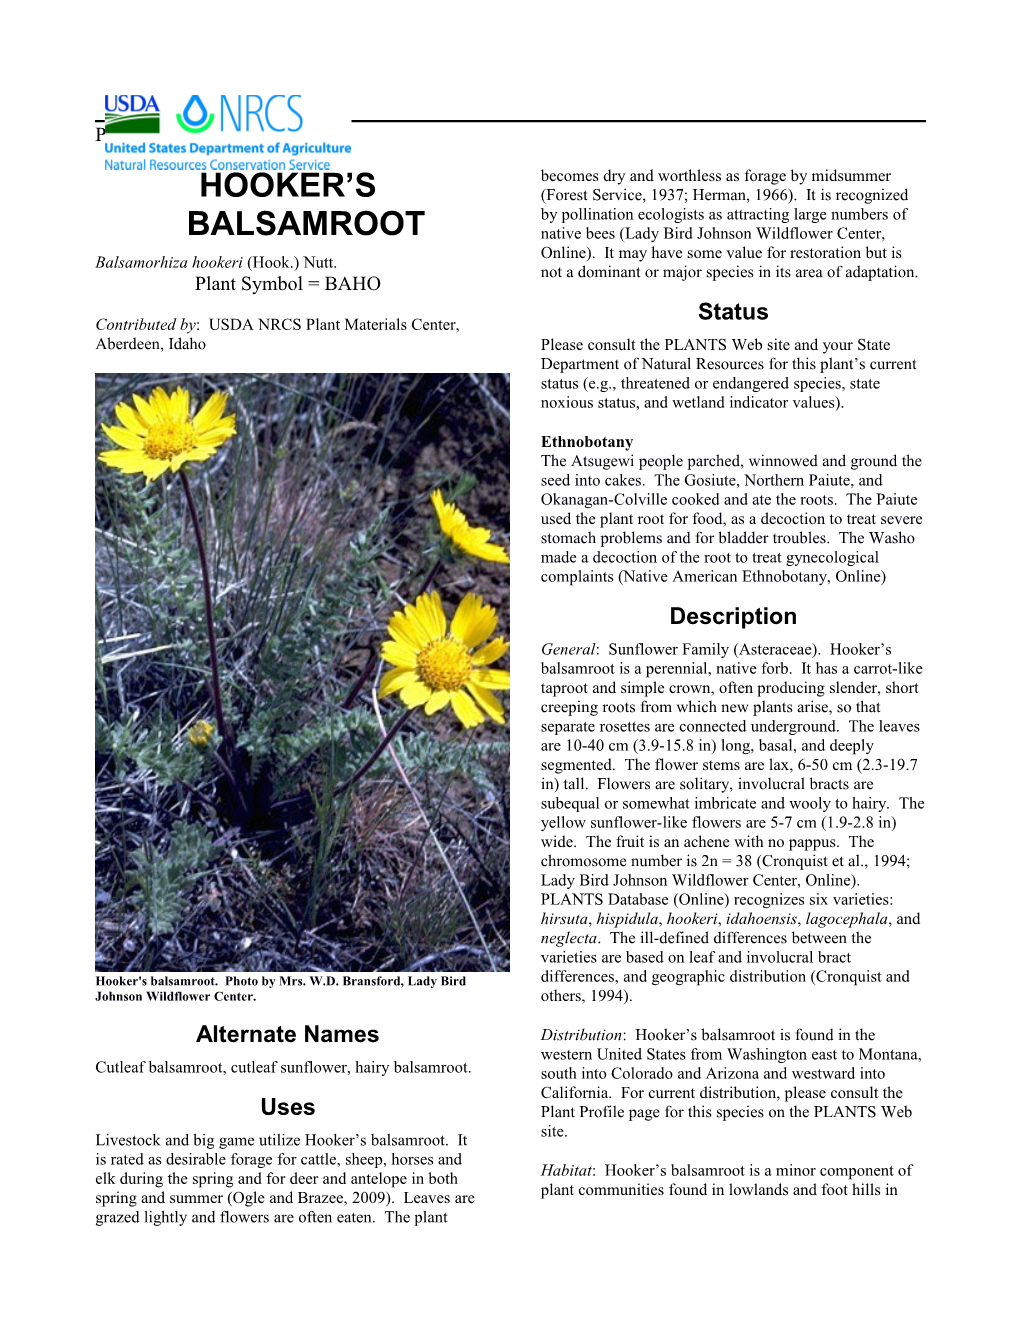 Plant Guide for Hooker's Balsamroot (Balsamorhiza Hookerii)